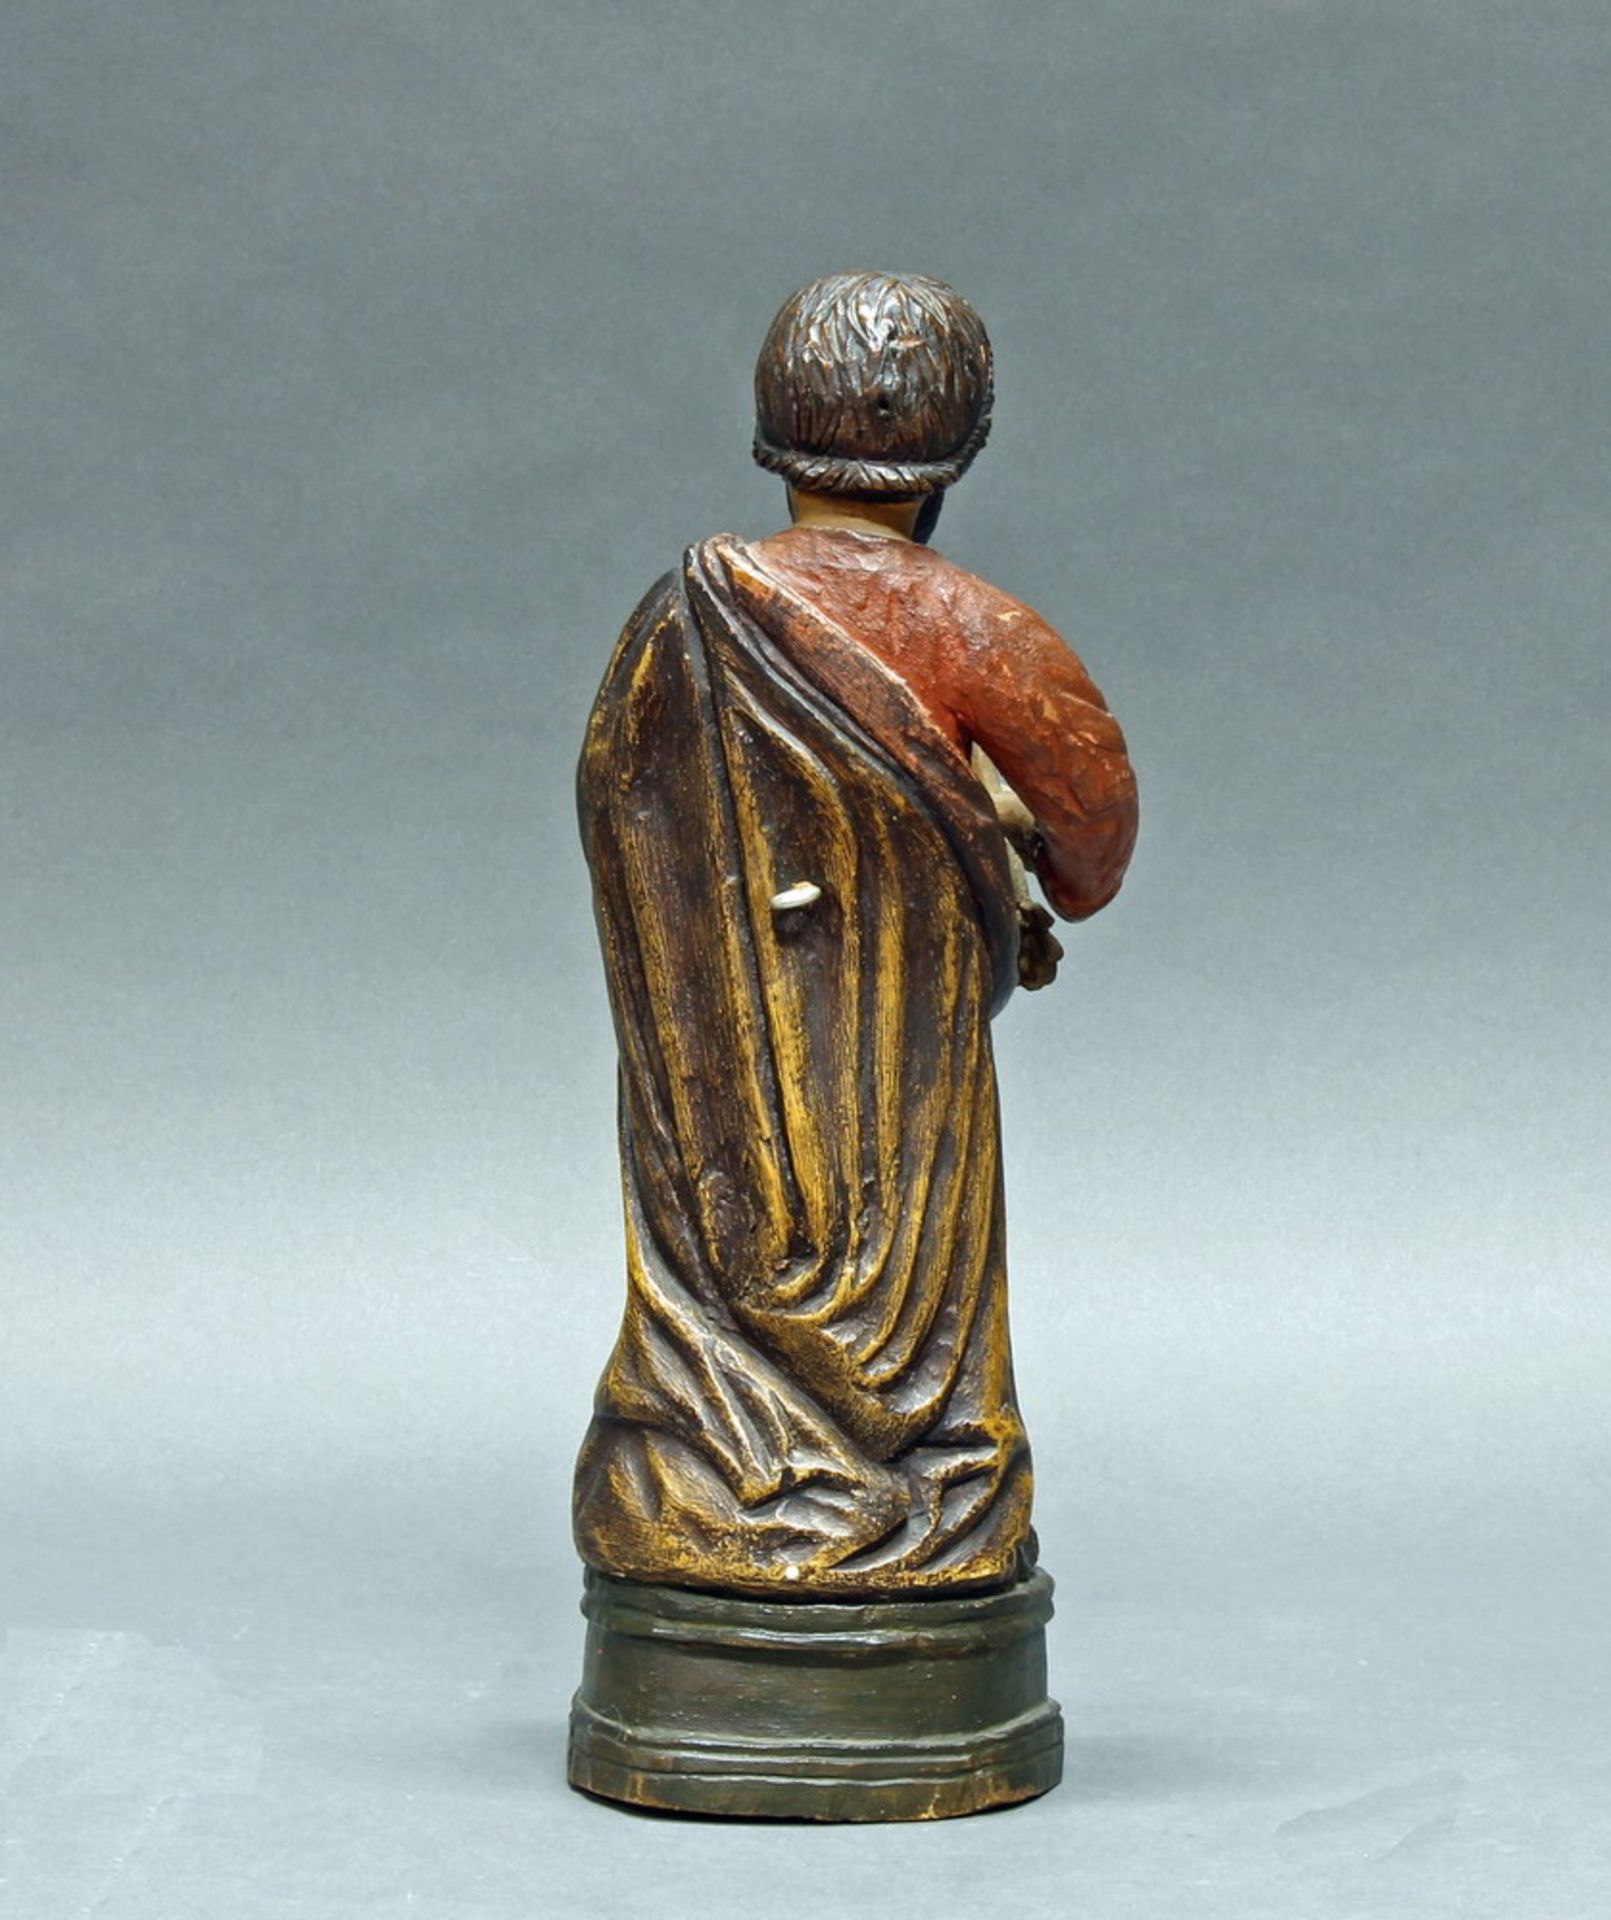 Skulptur, Holz geschnitzt, "Hl. Petrus", 19./20.Jh., farbig gefasst, 34.5 cm hoch, rechte Hand - Bild 2 aus 3